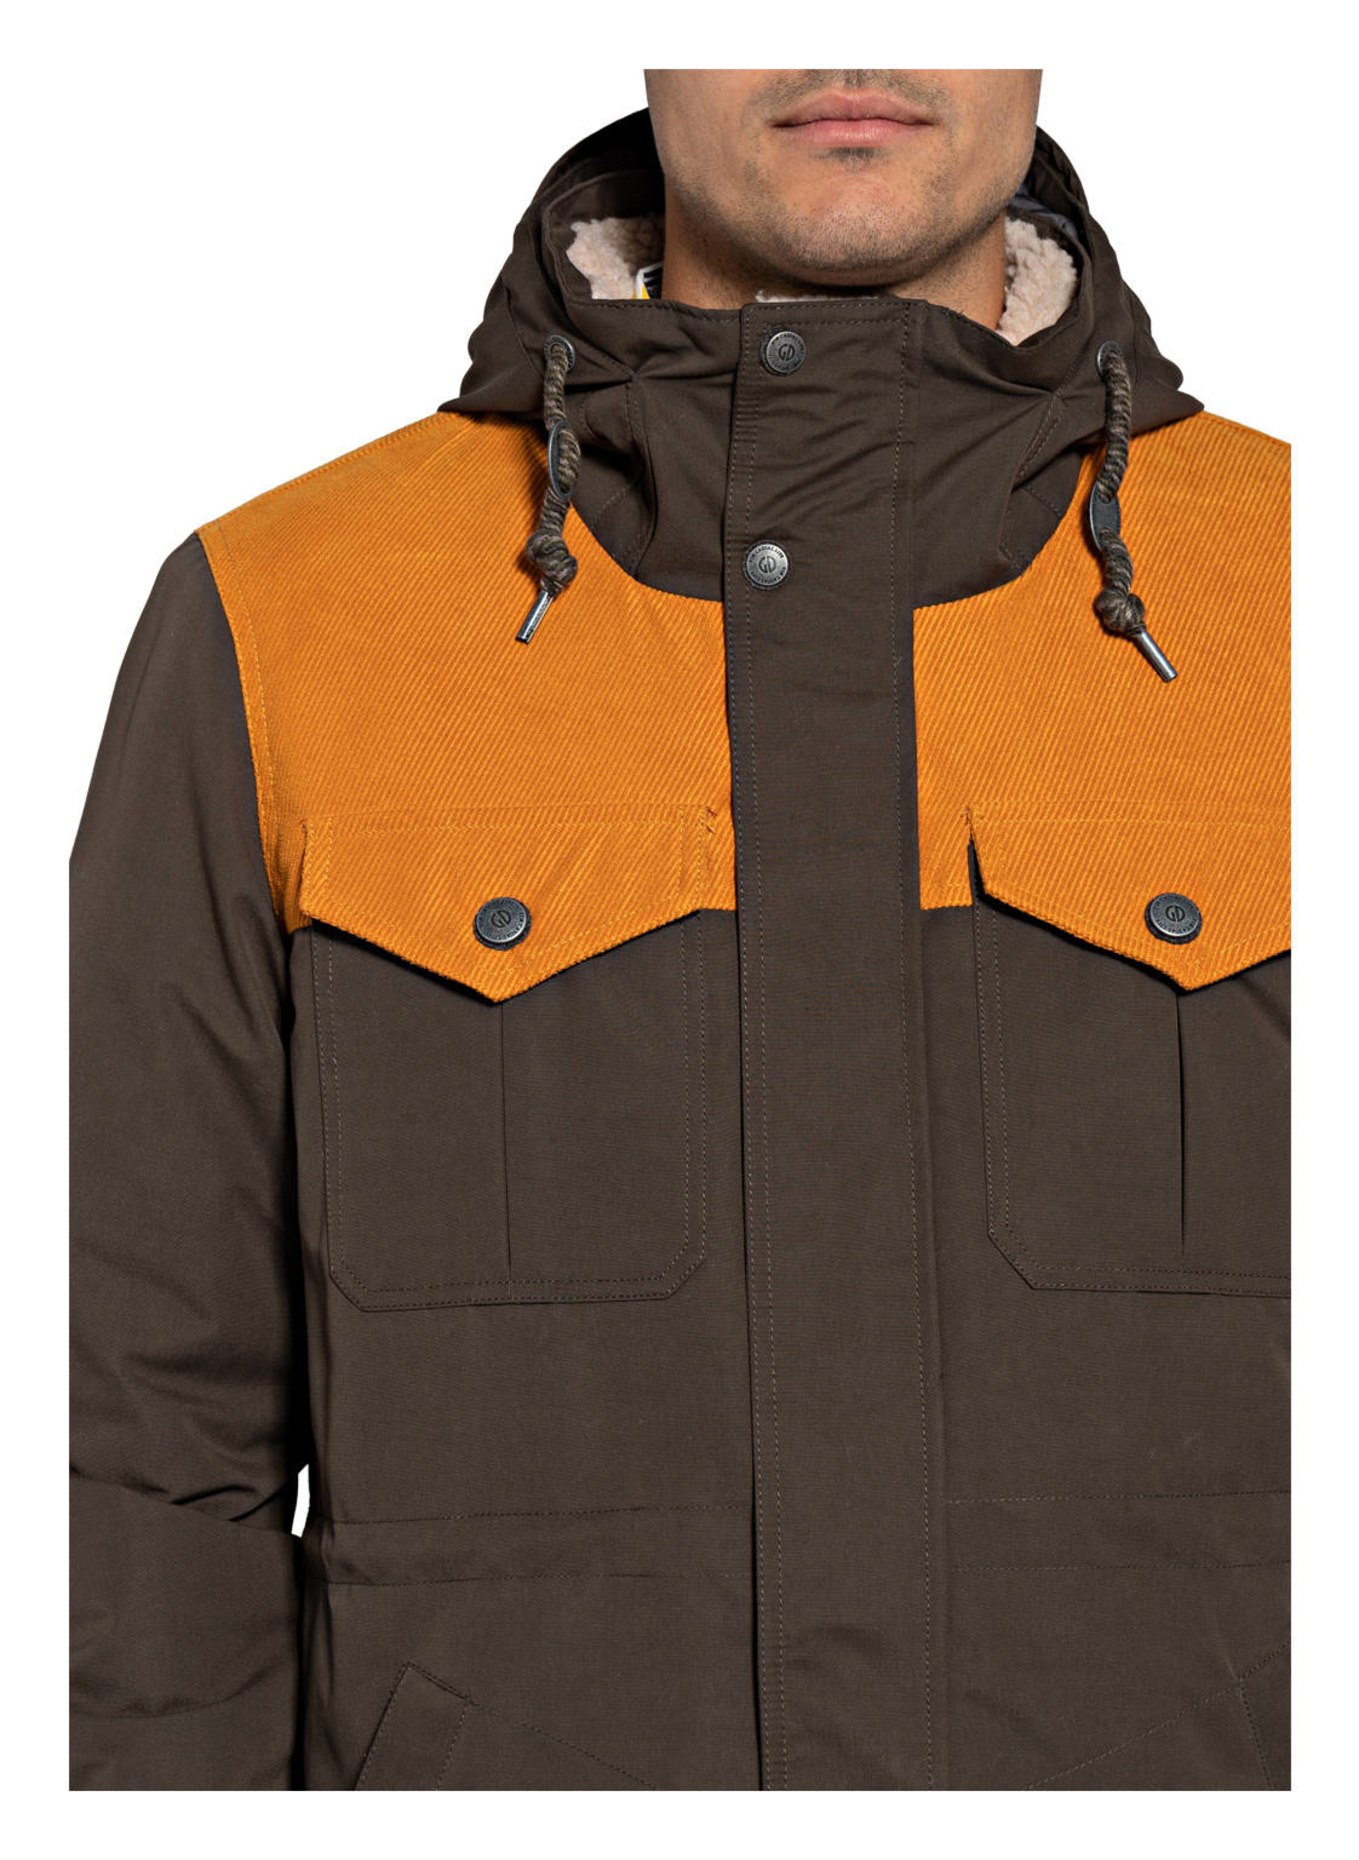 G.I.G.A. Outdoor DX dark in brown/ STORMIGA jacket orange by killtec